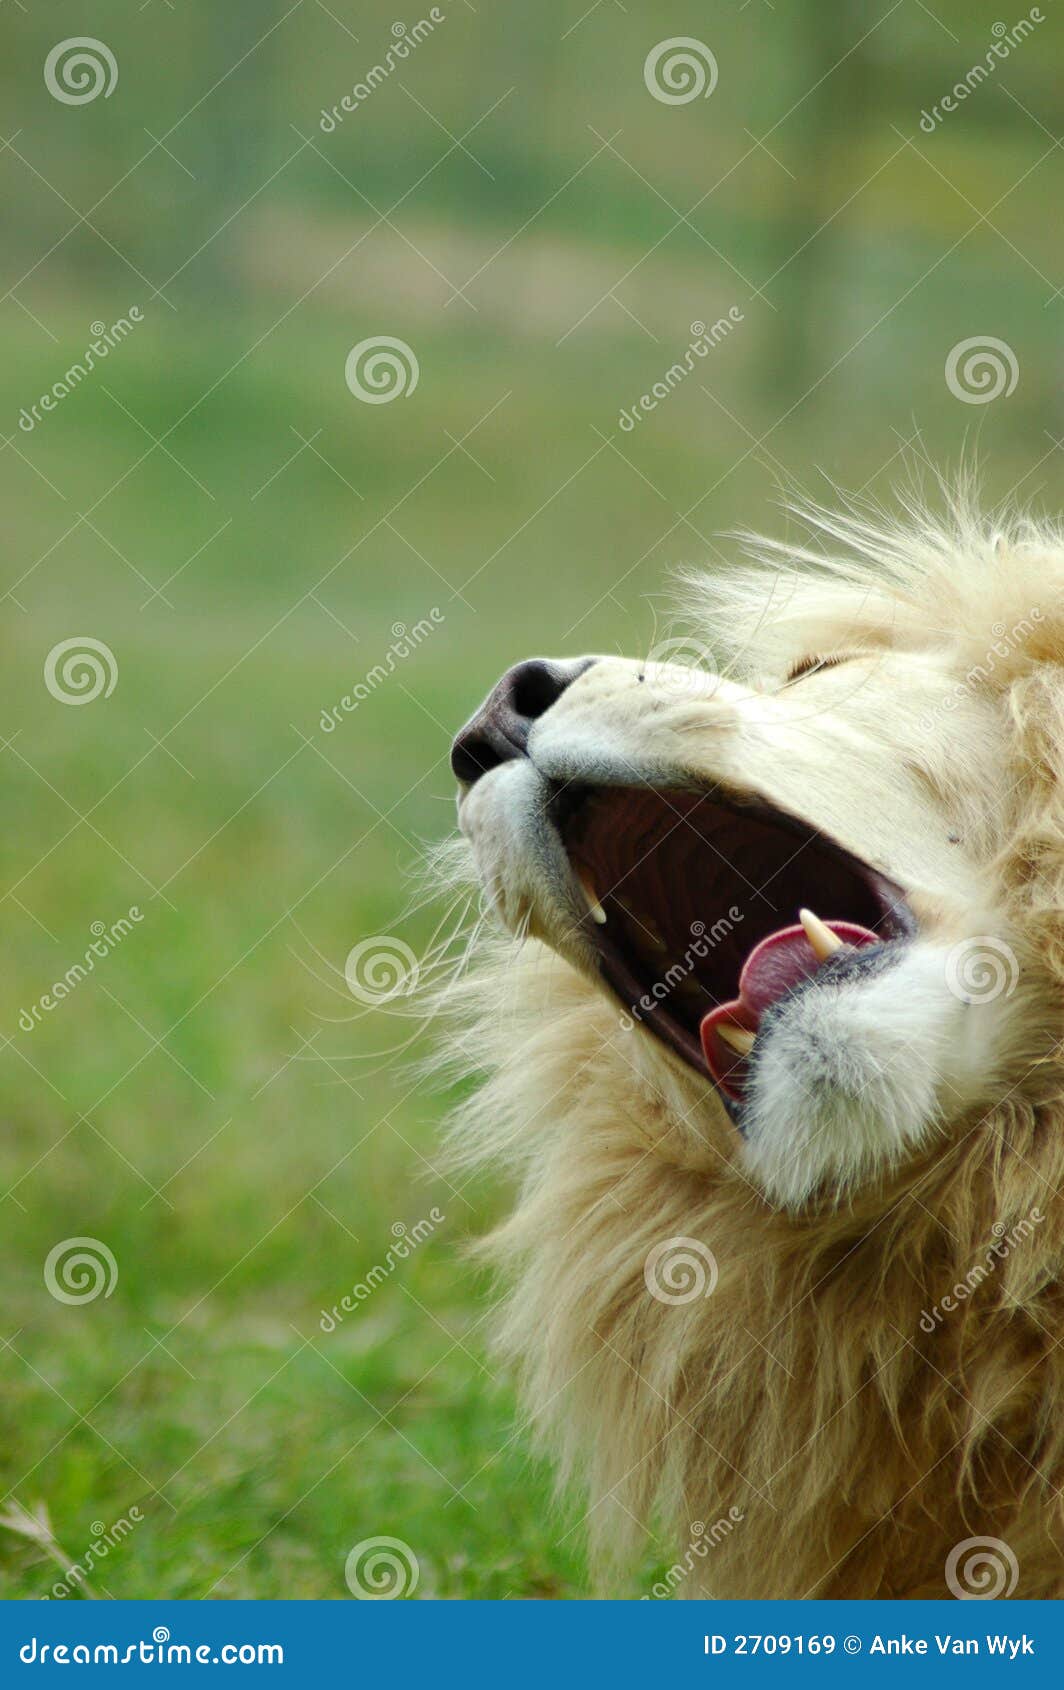 Lion Roaring Royalty-Free Stock Photography | CartoonDealer.com #141490523